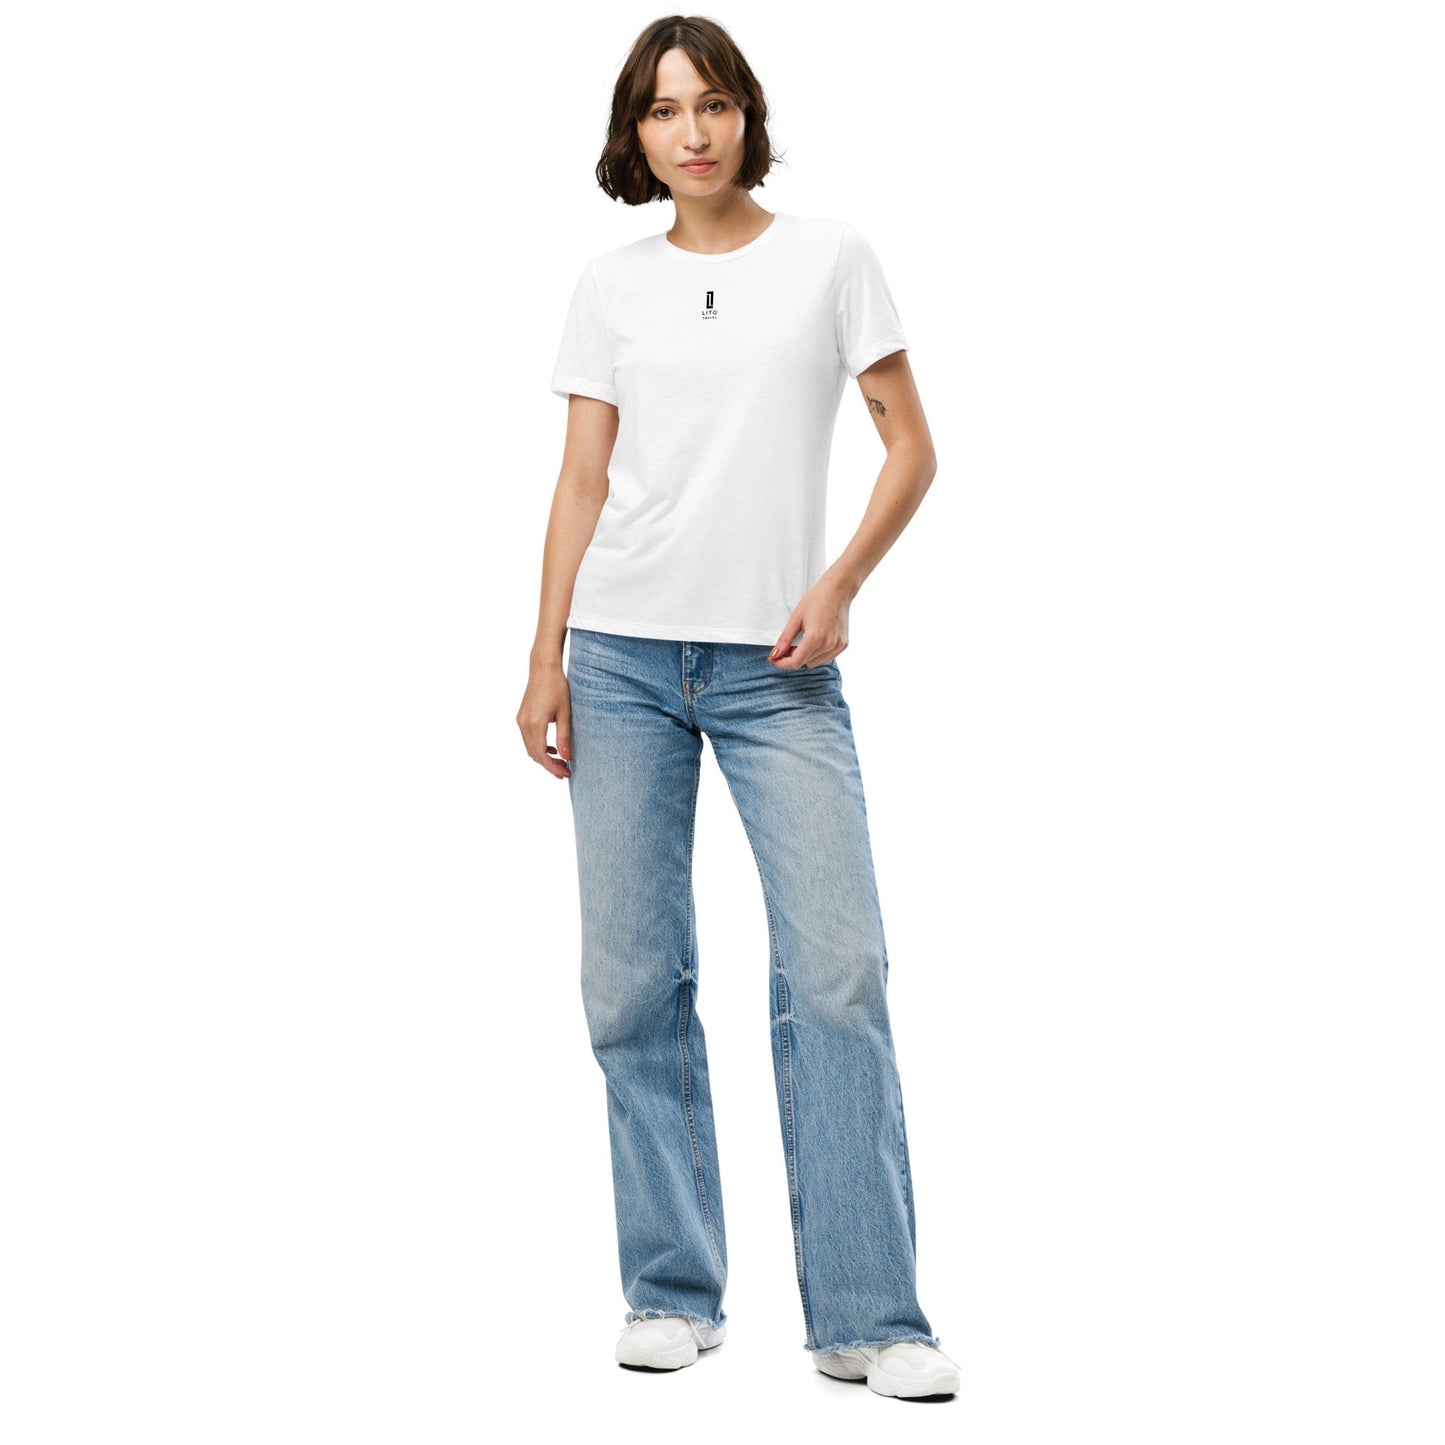 LITO Travel™ Women’s relaxed tri-blend t-shirt